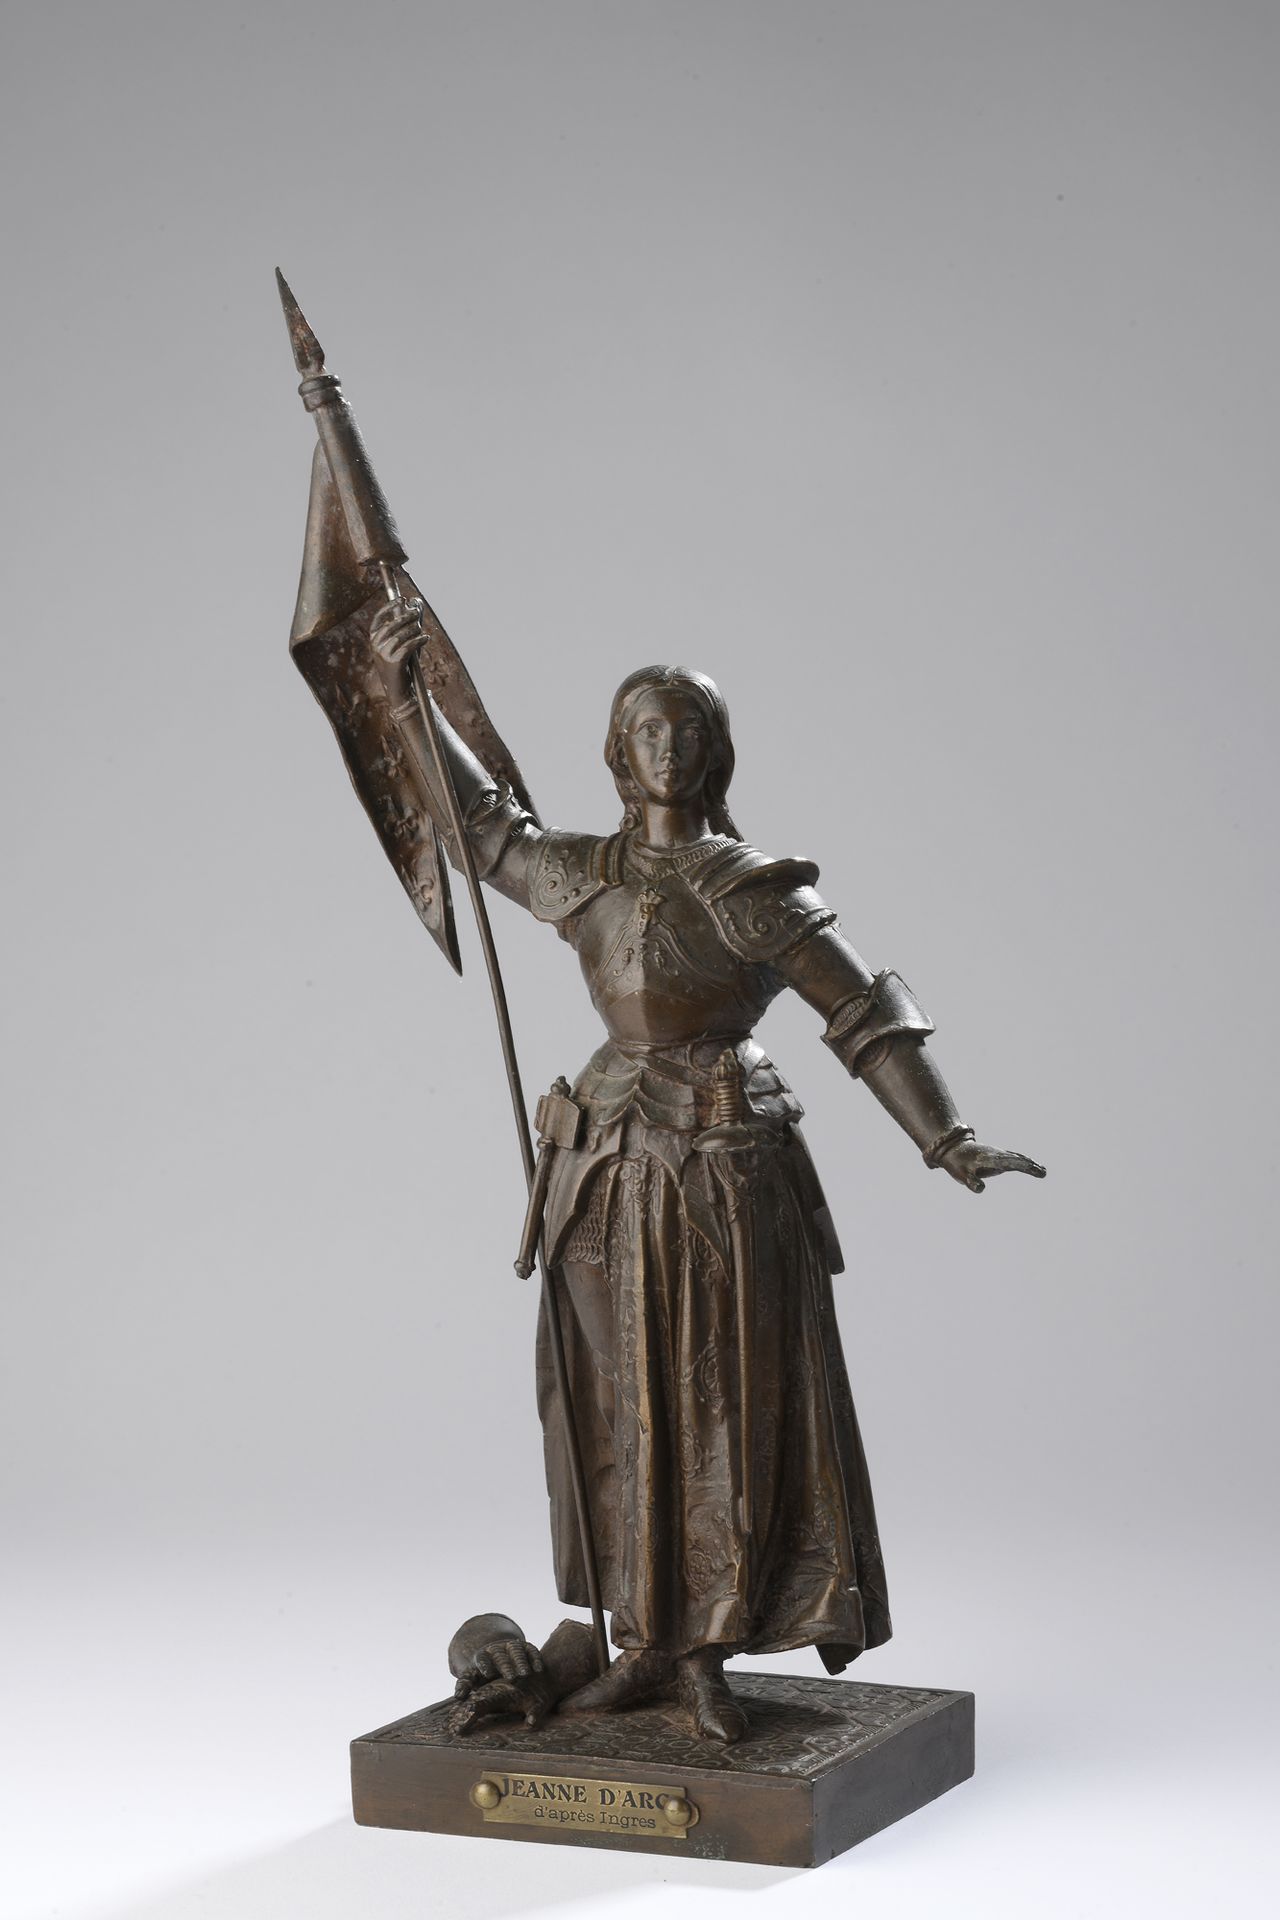 Null 19 世纪法国作品，取材于让-多米尼克-英格里斯（1780-1867 年）
圣女贞德站立，手持标准，取材于 1854 年查理七世加冕礼上的圣女贞德。
&hellip;